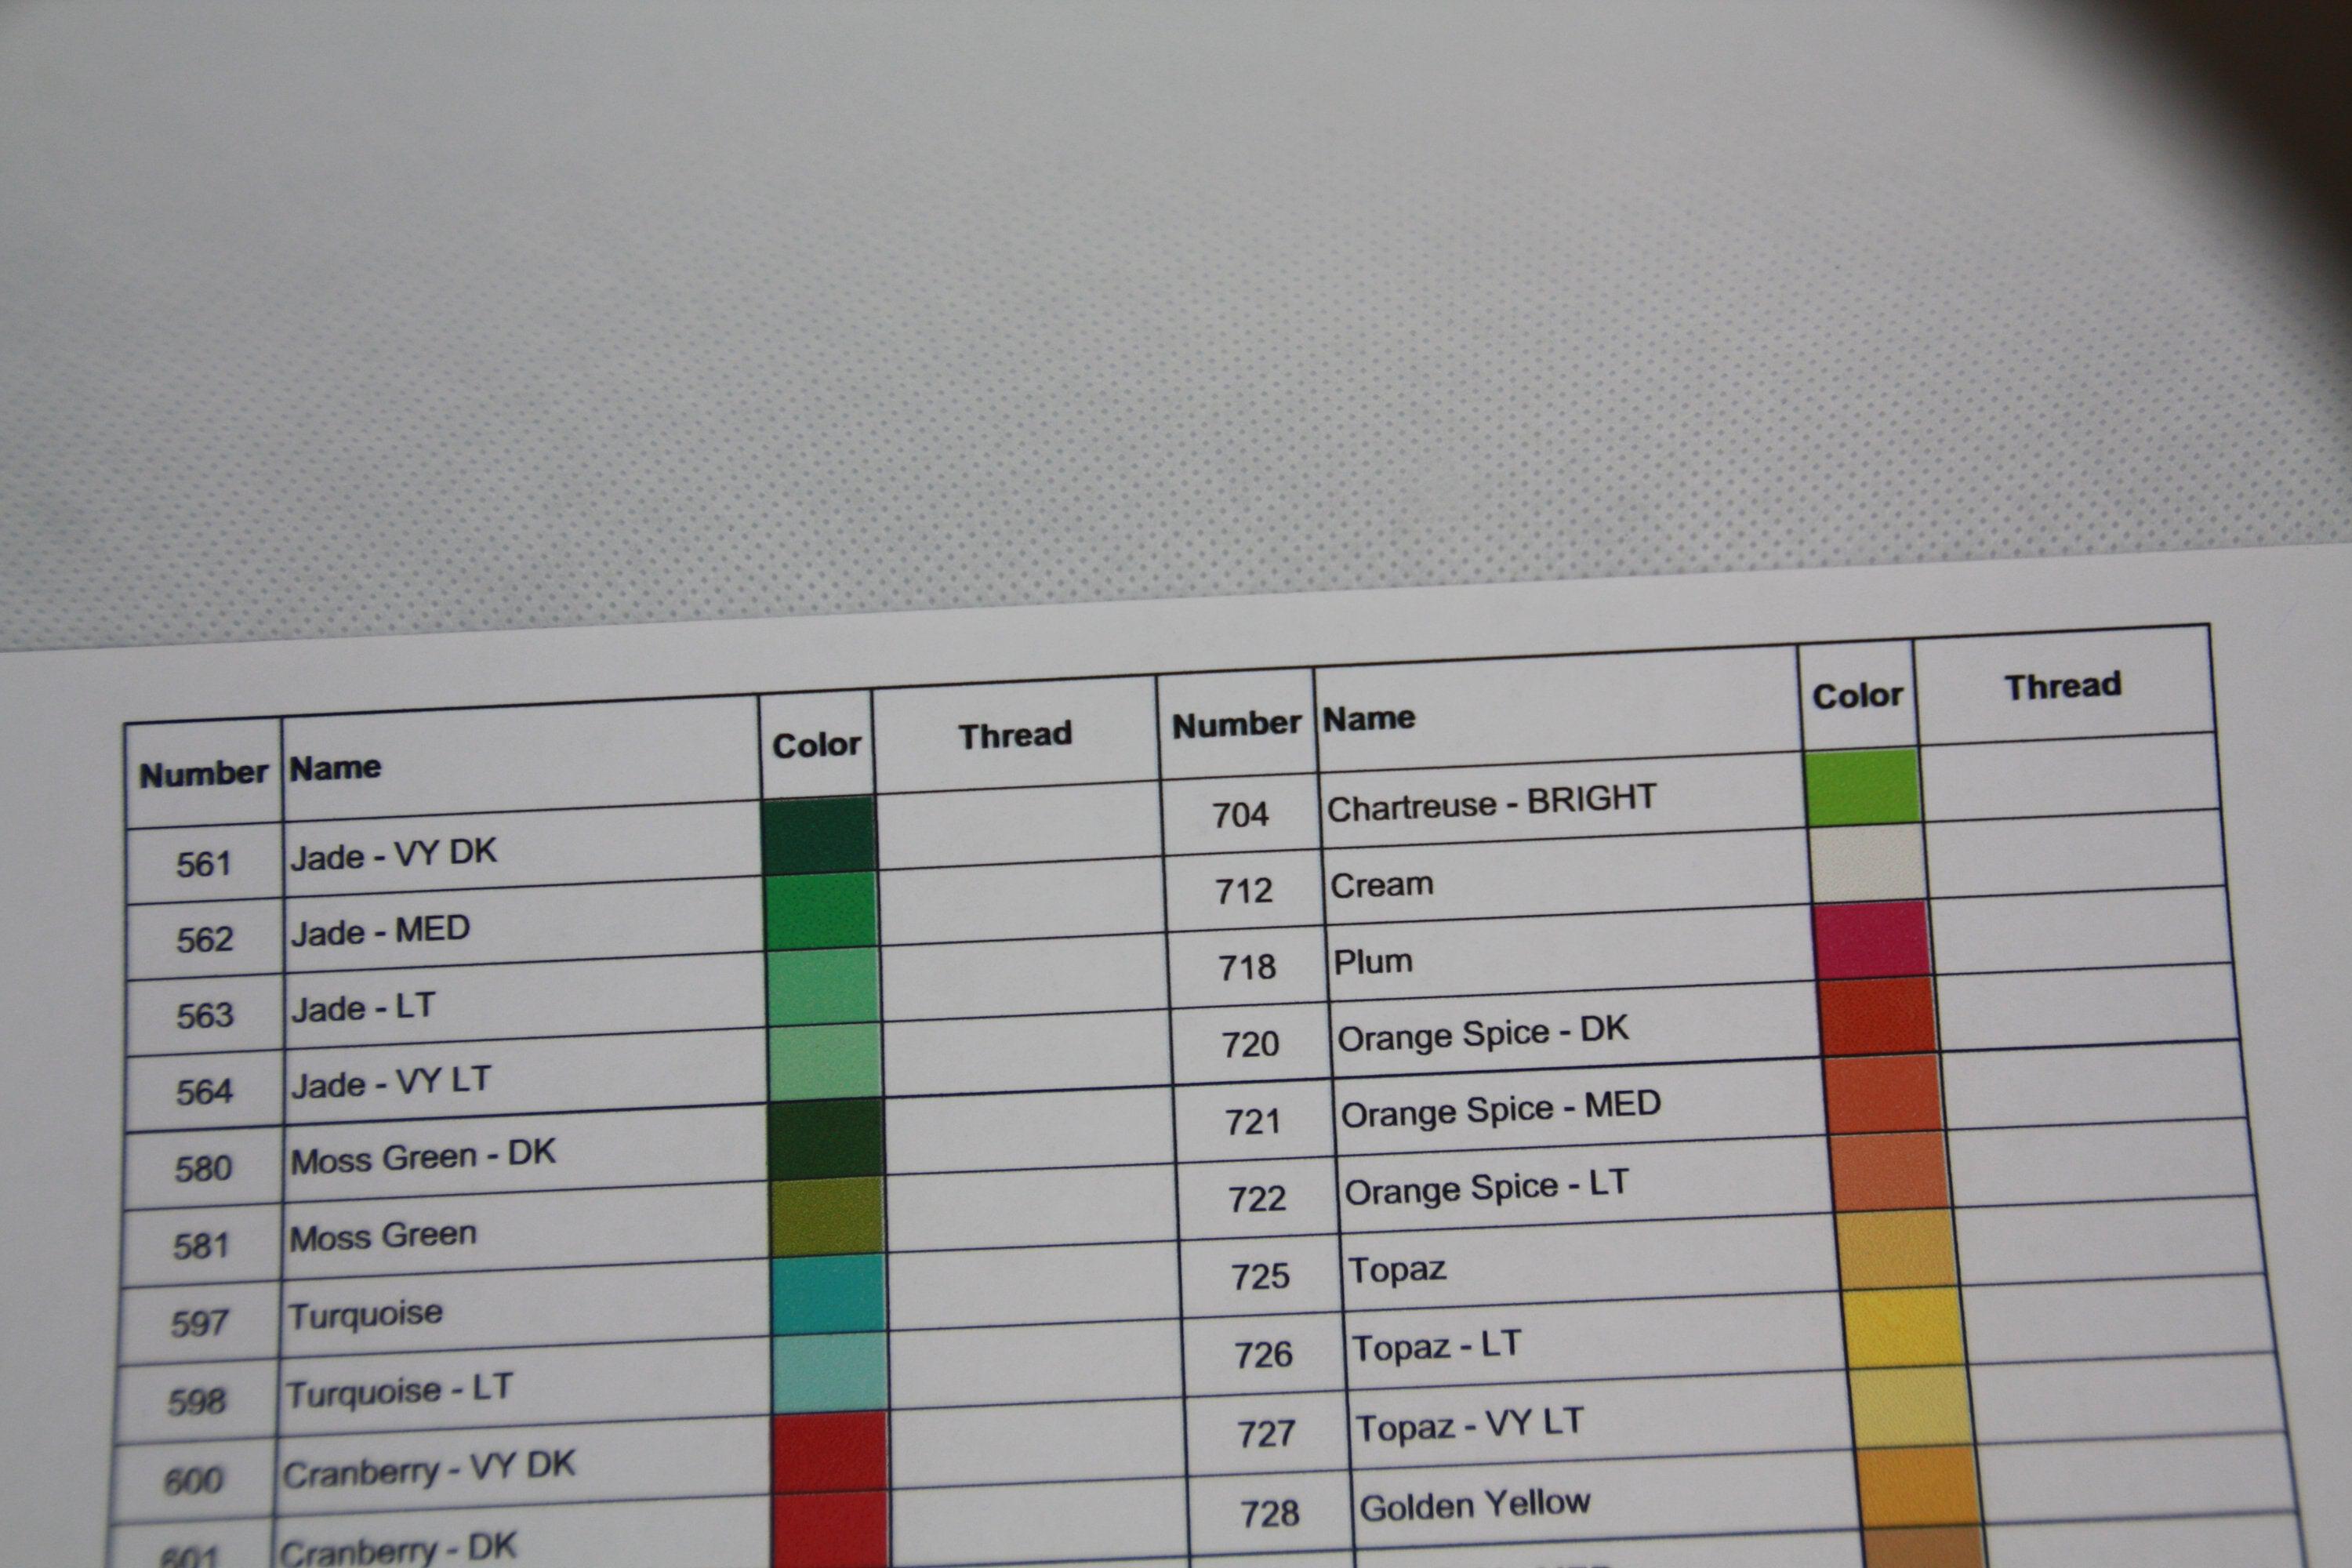 DMC Color Chart Floss Inventory Tracker digital PDF 